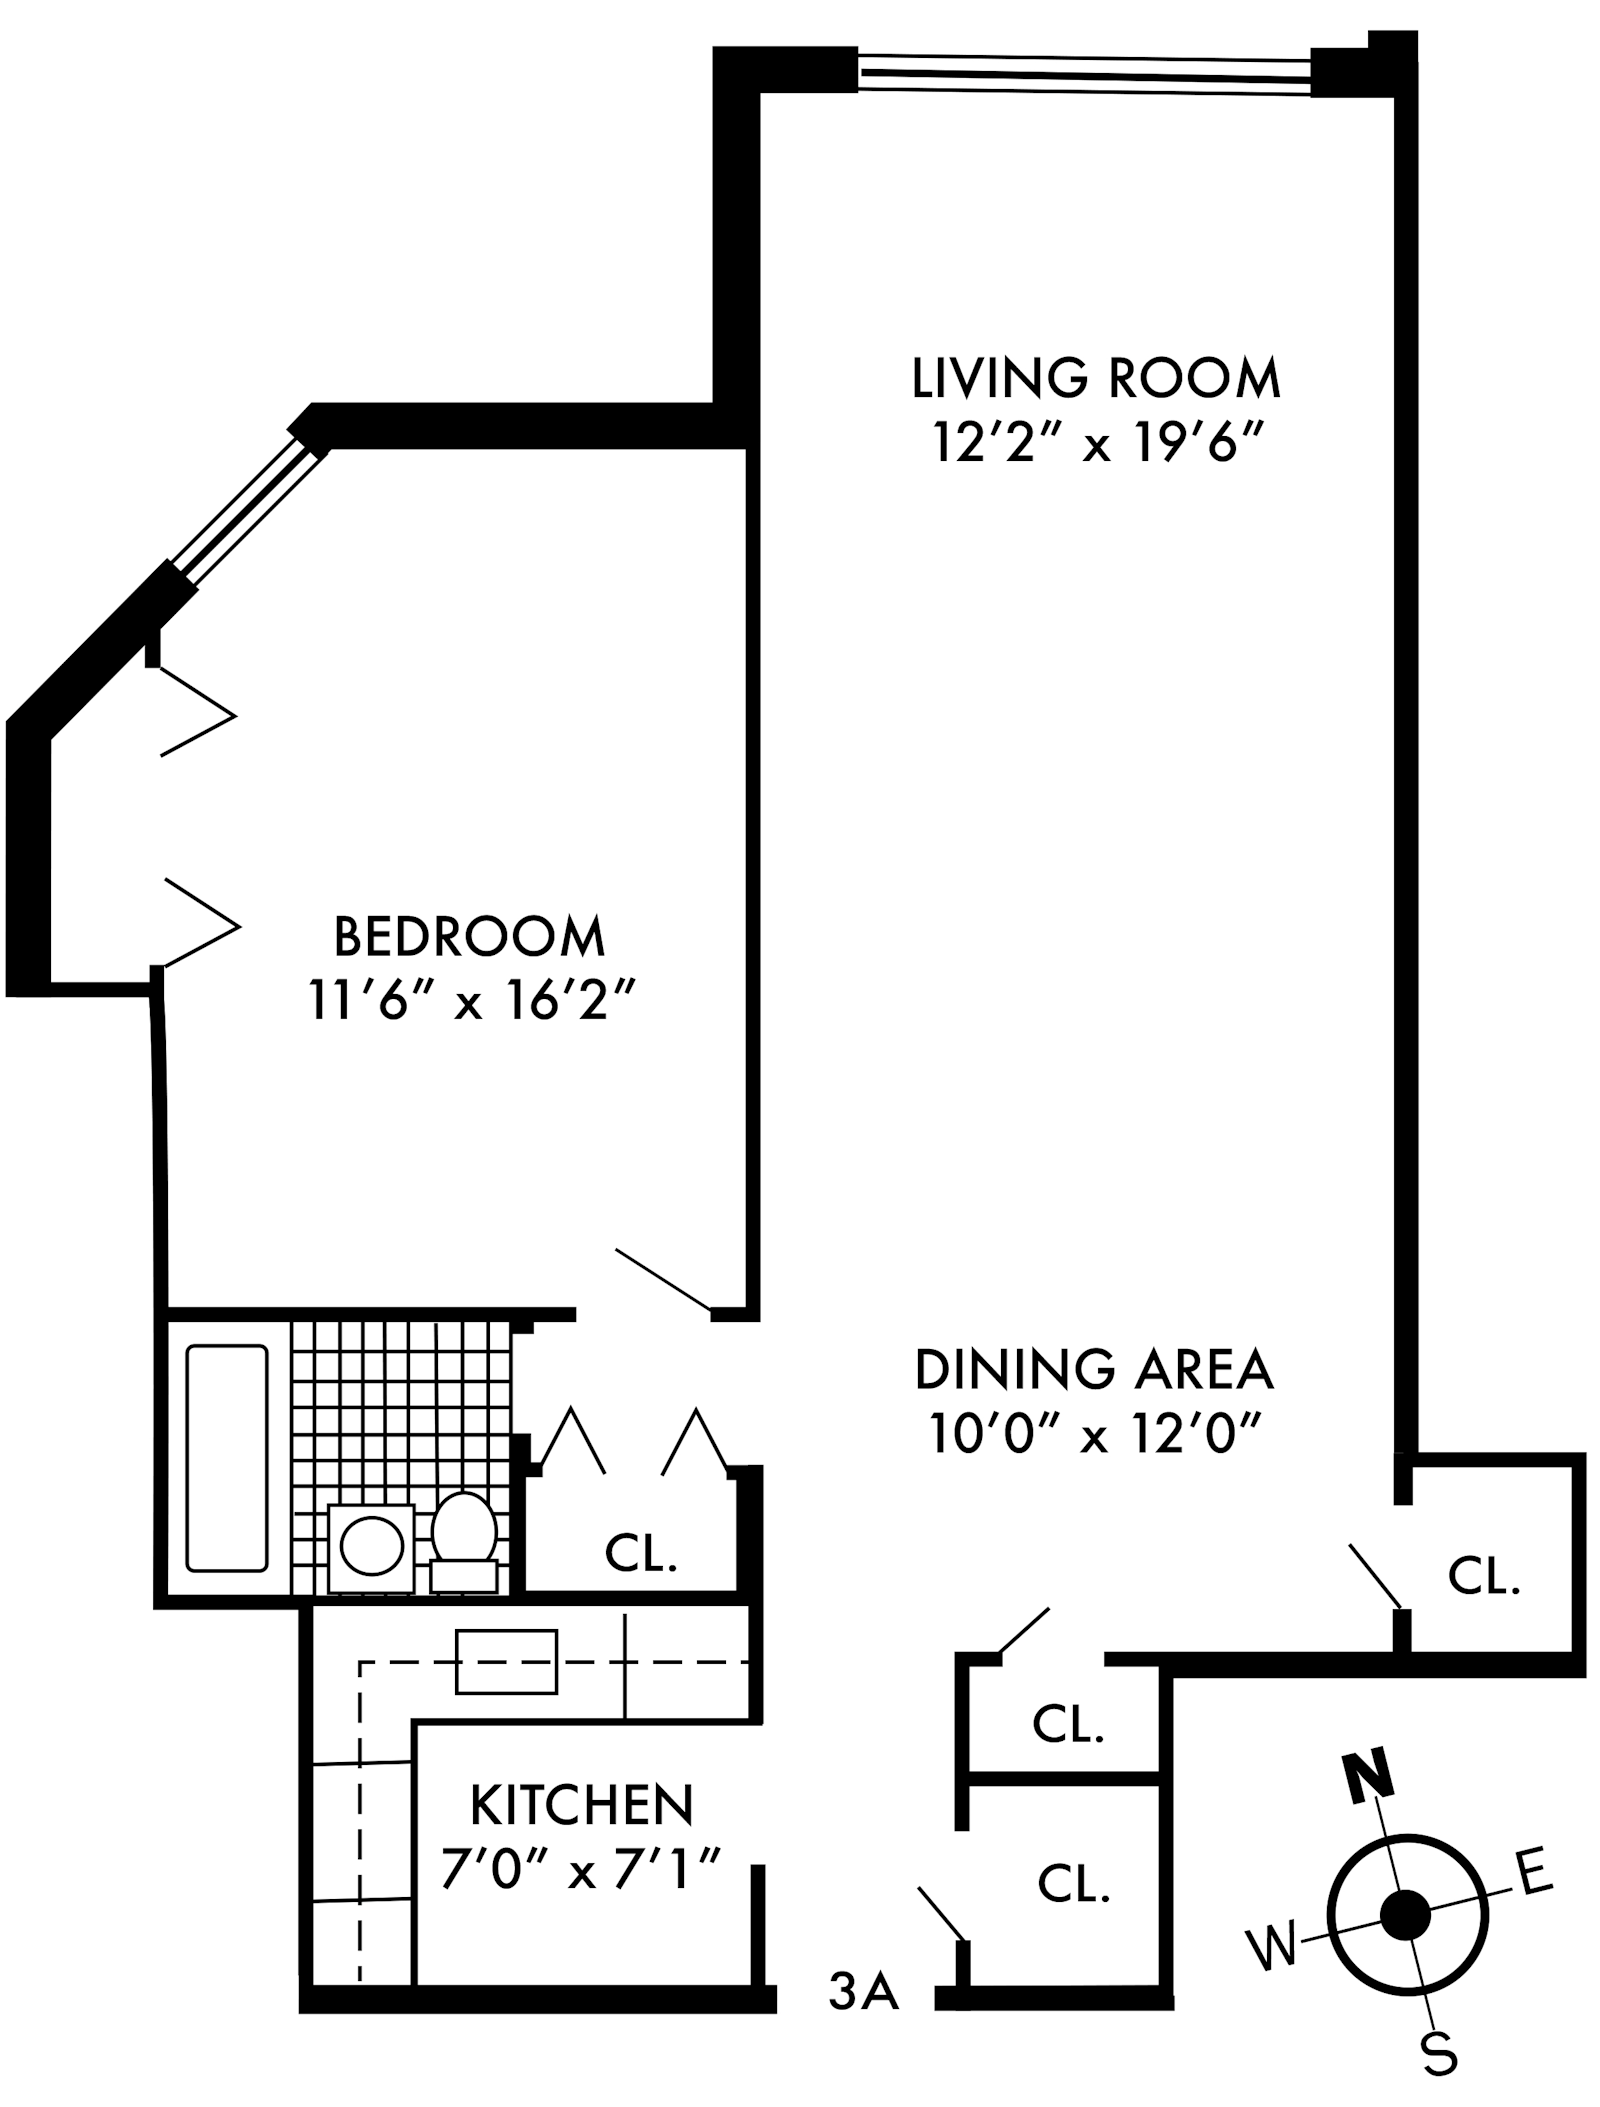 Floorplan for 91 Van Cortlandt Ave W, 3A